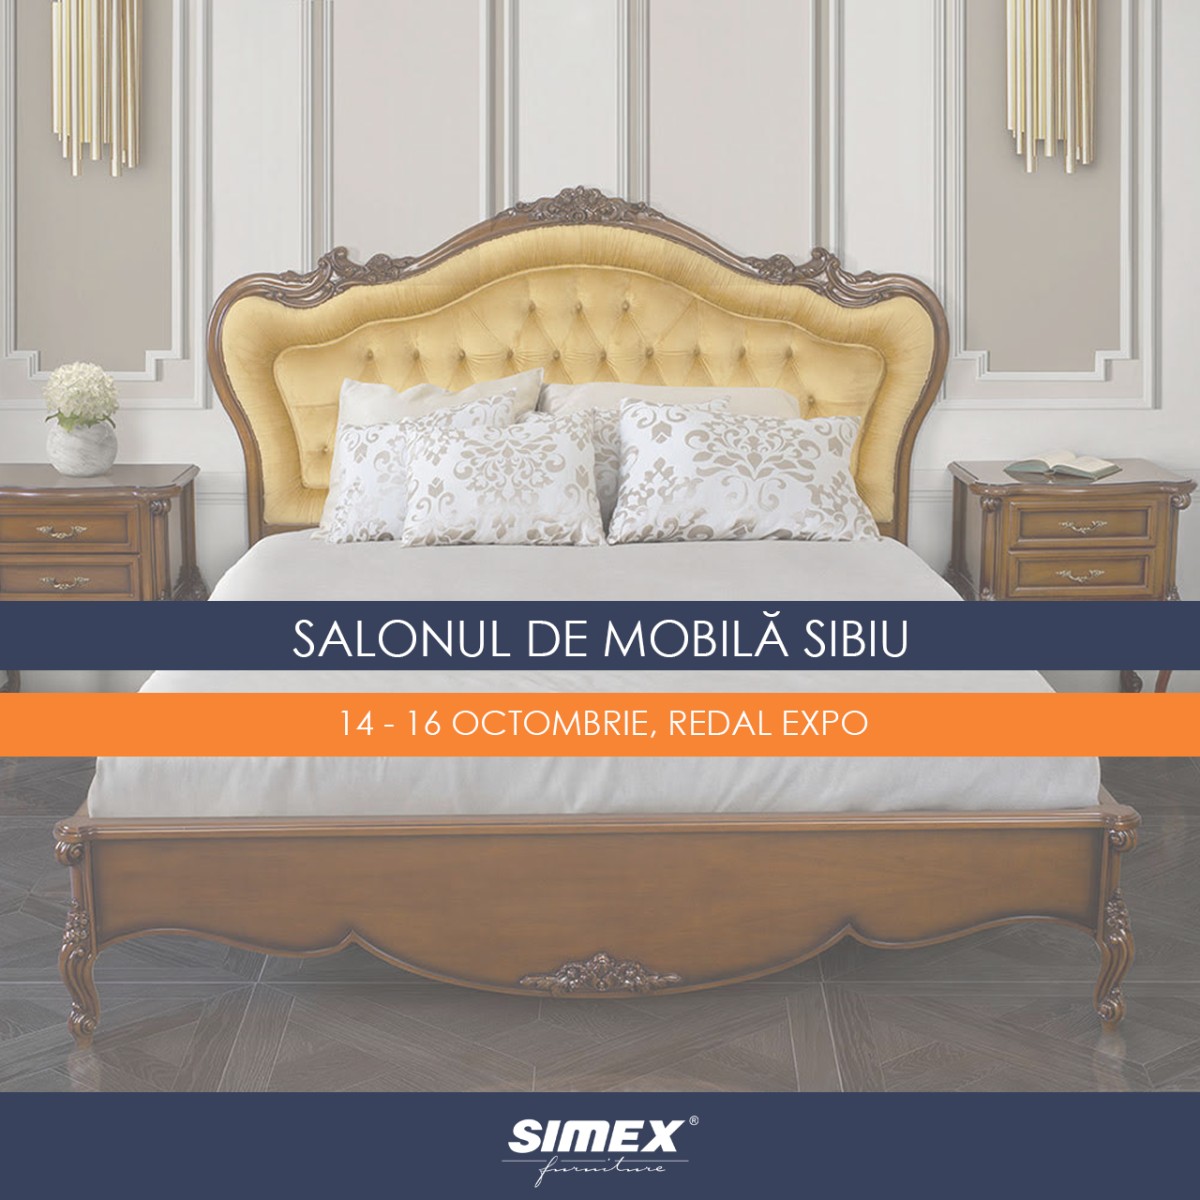 Simex, brand românesc cu renume mondial, prezent la BIFE SIM 2022